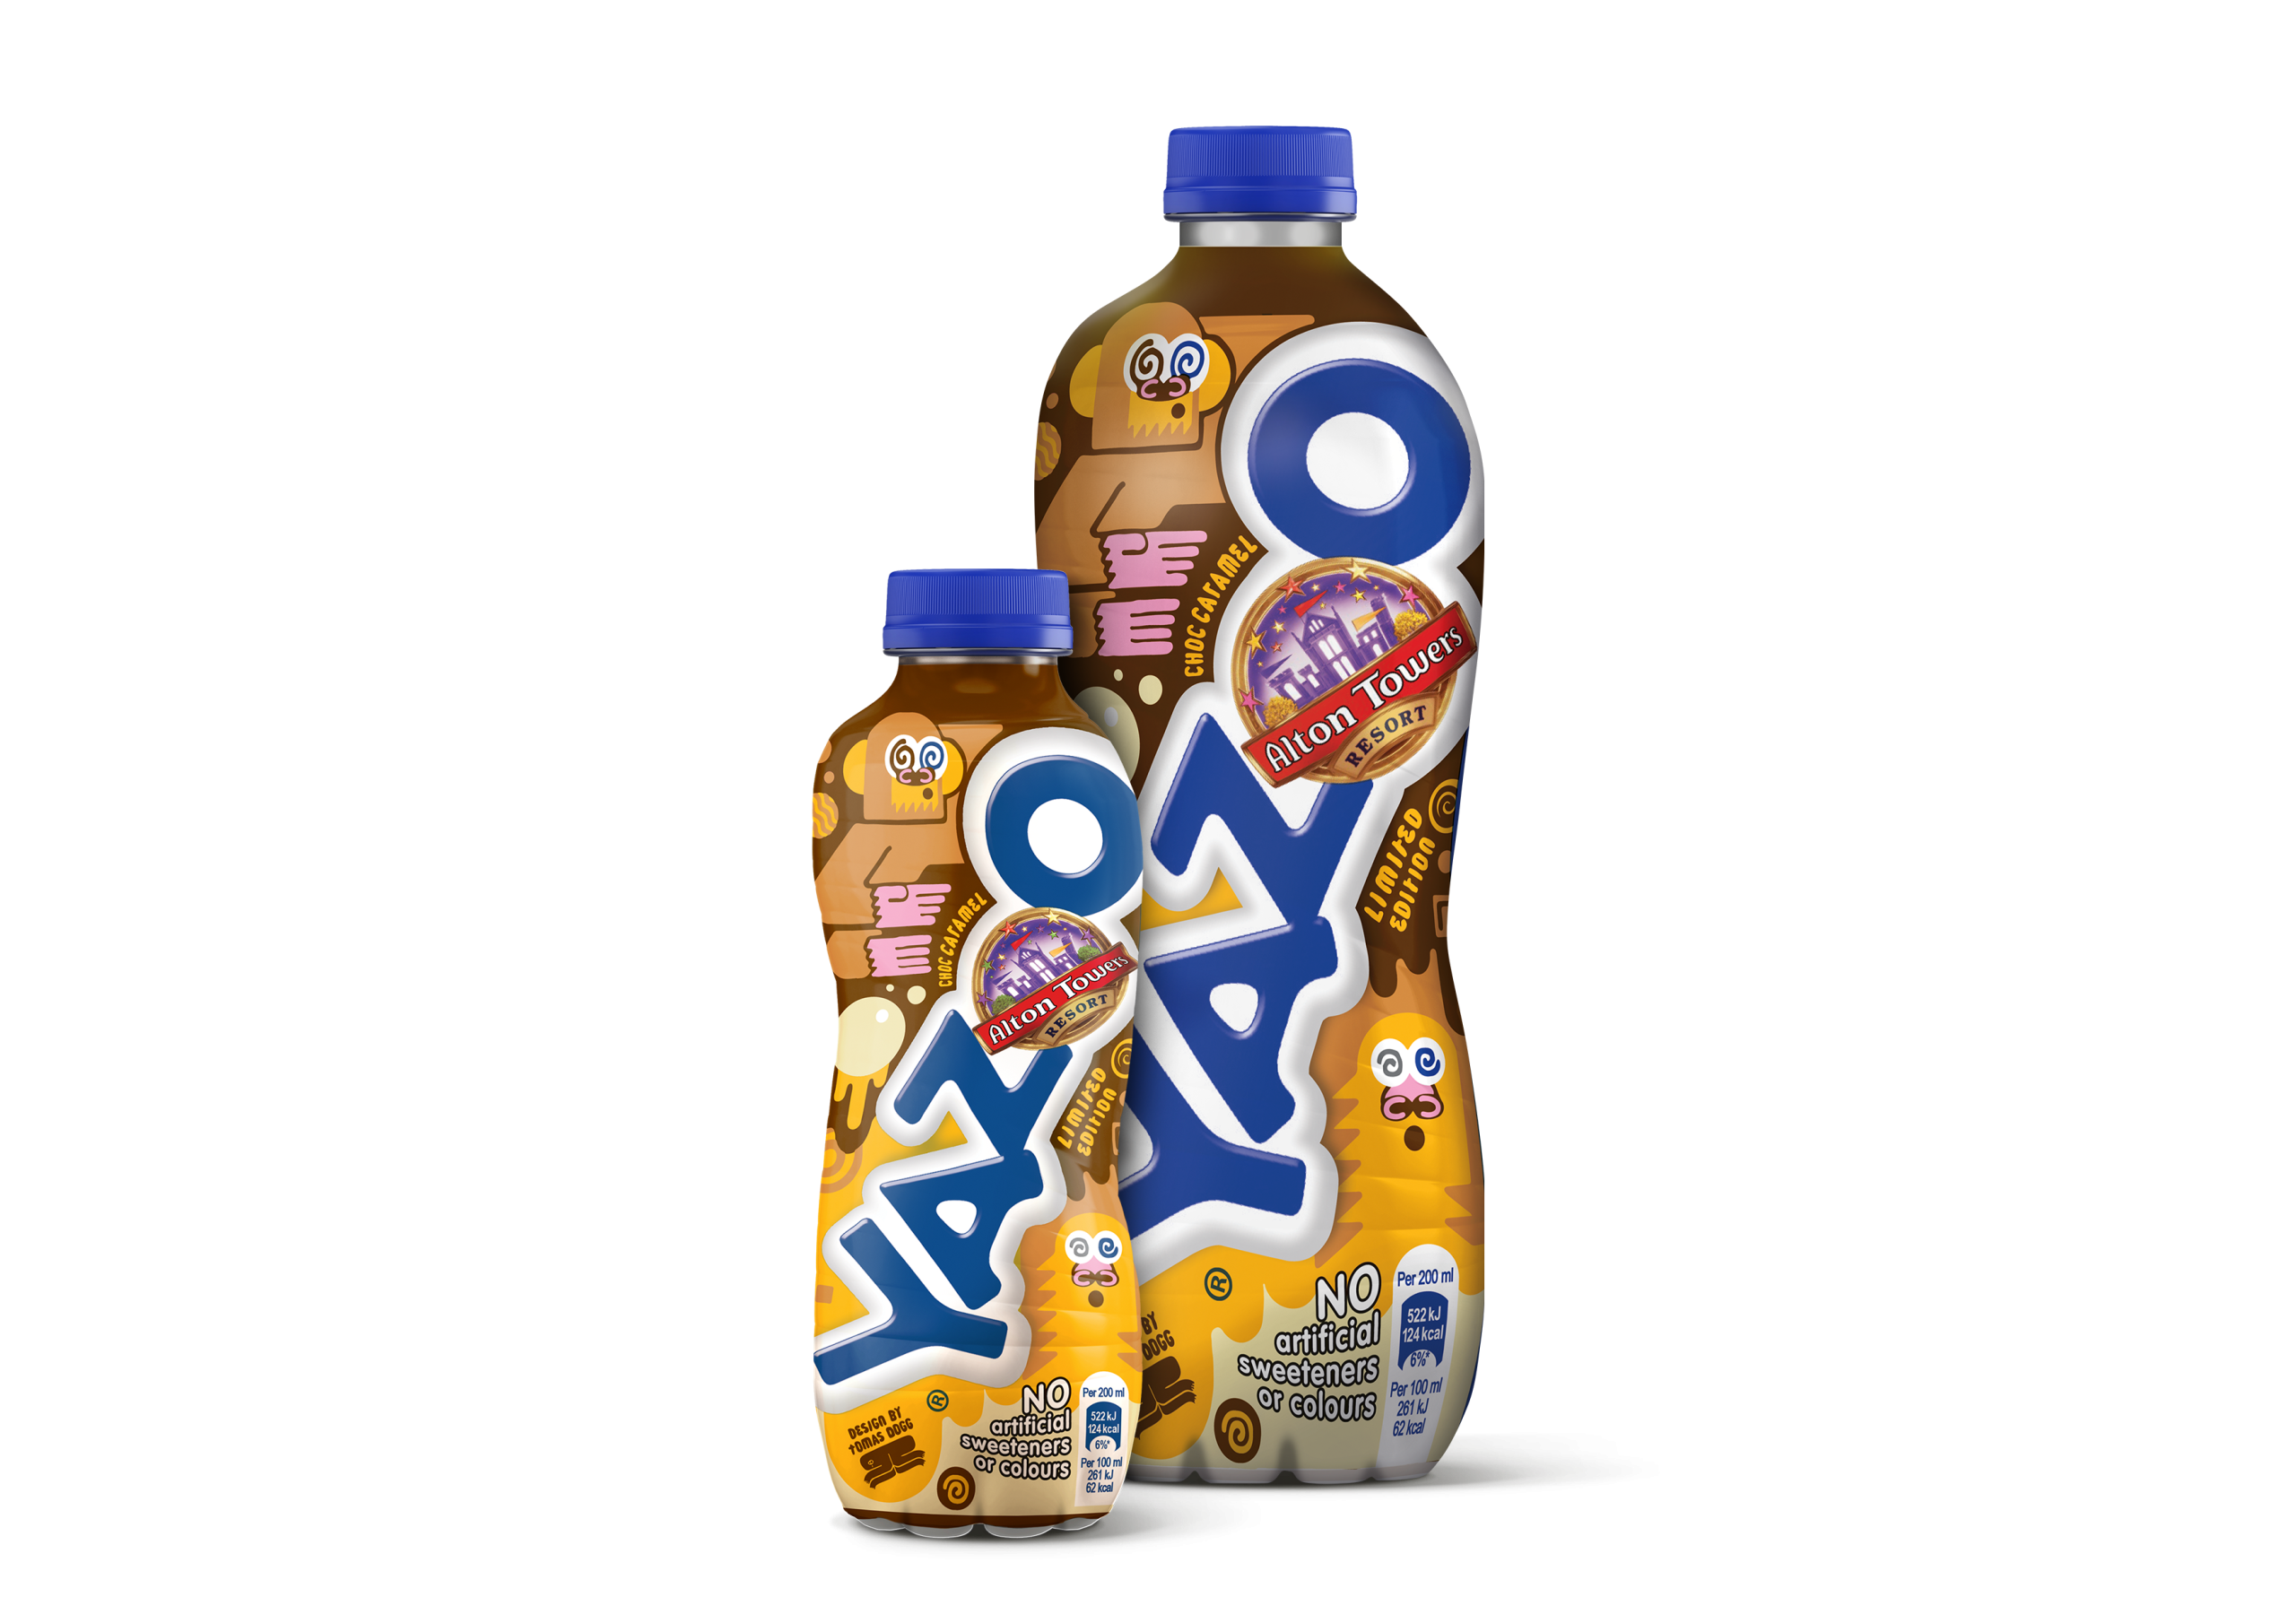 YAZOO brings back limited-edition Choc Caramel due to popular demand